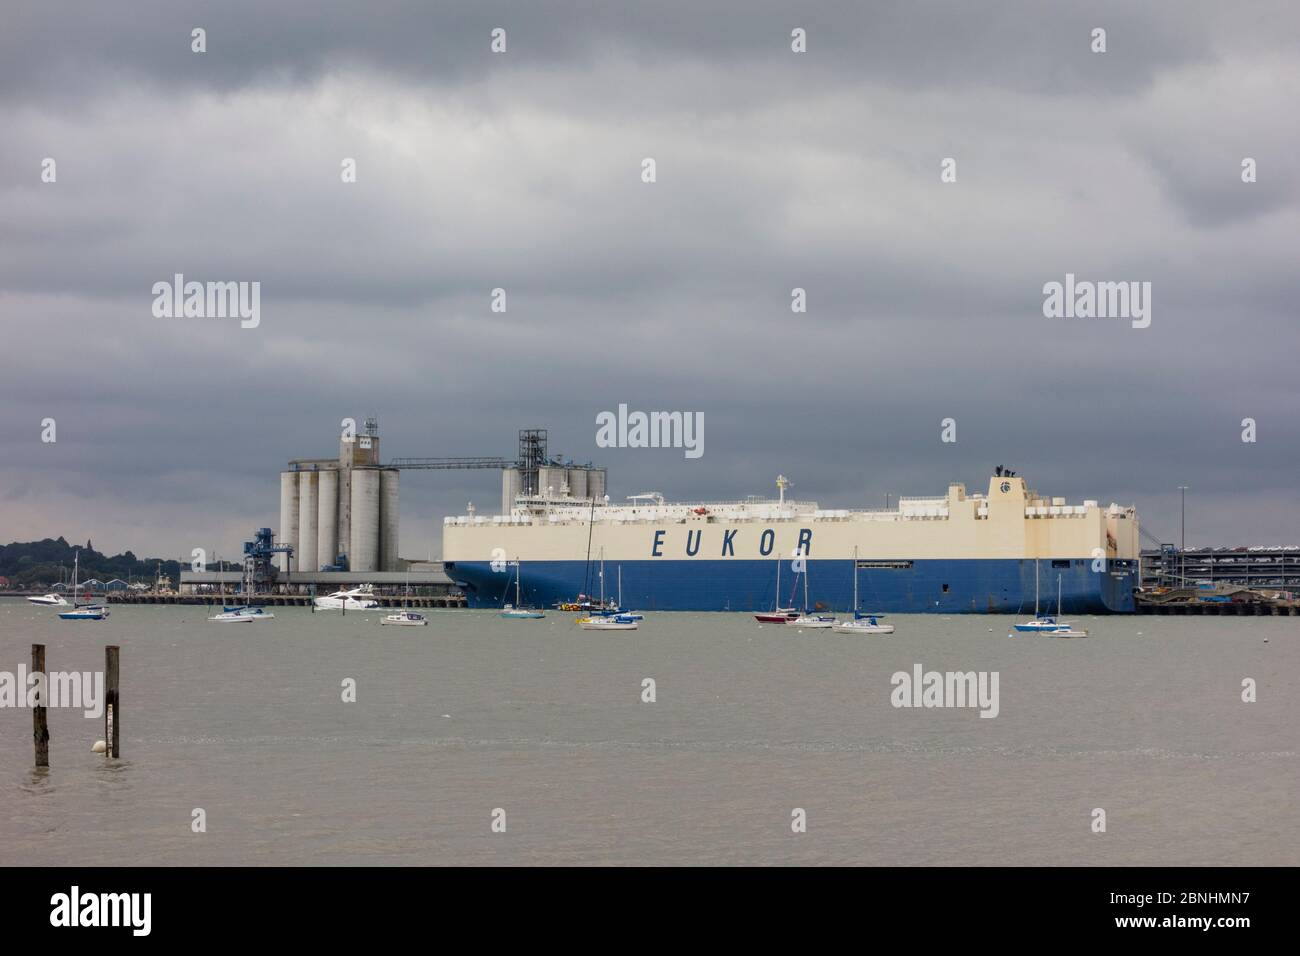 Eukor Shipping Company Vessel  on River Itchen, Southampton, Hampshire, UK Stock Photo